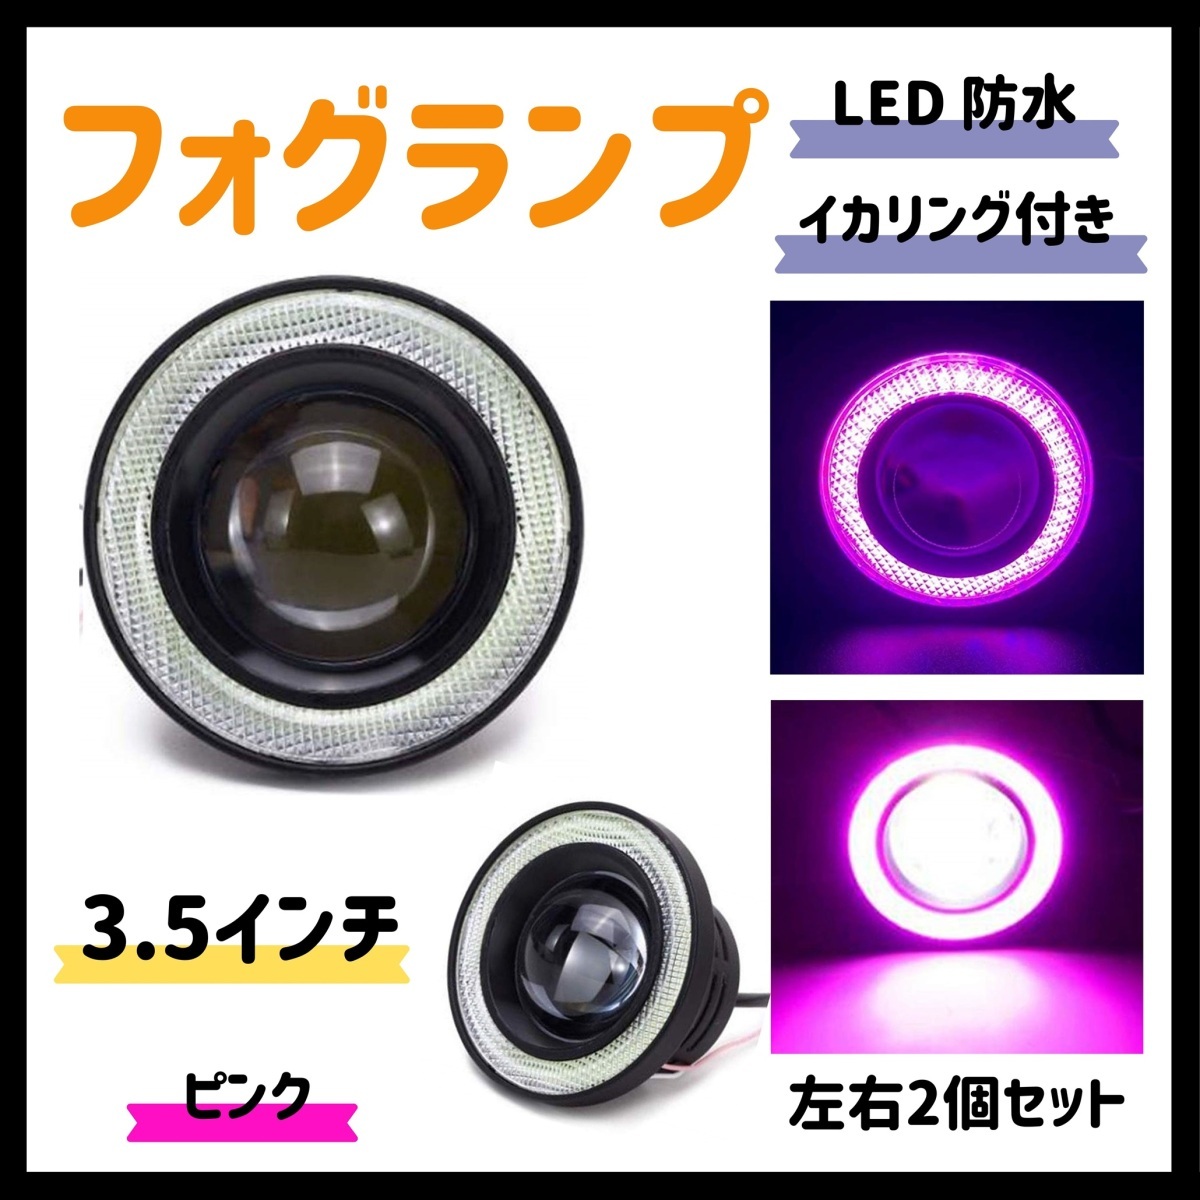 Kstyle ピンク 3.5 LED フォグランプ 汎用 イカリング 付き 30w 高性能 COB 防水 左右_画像1